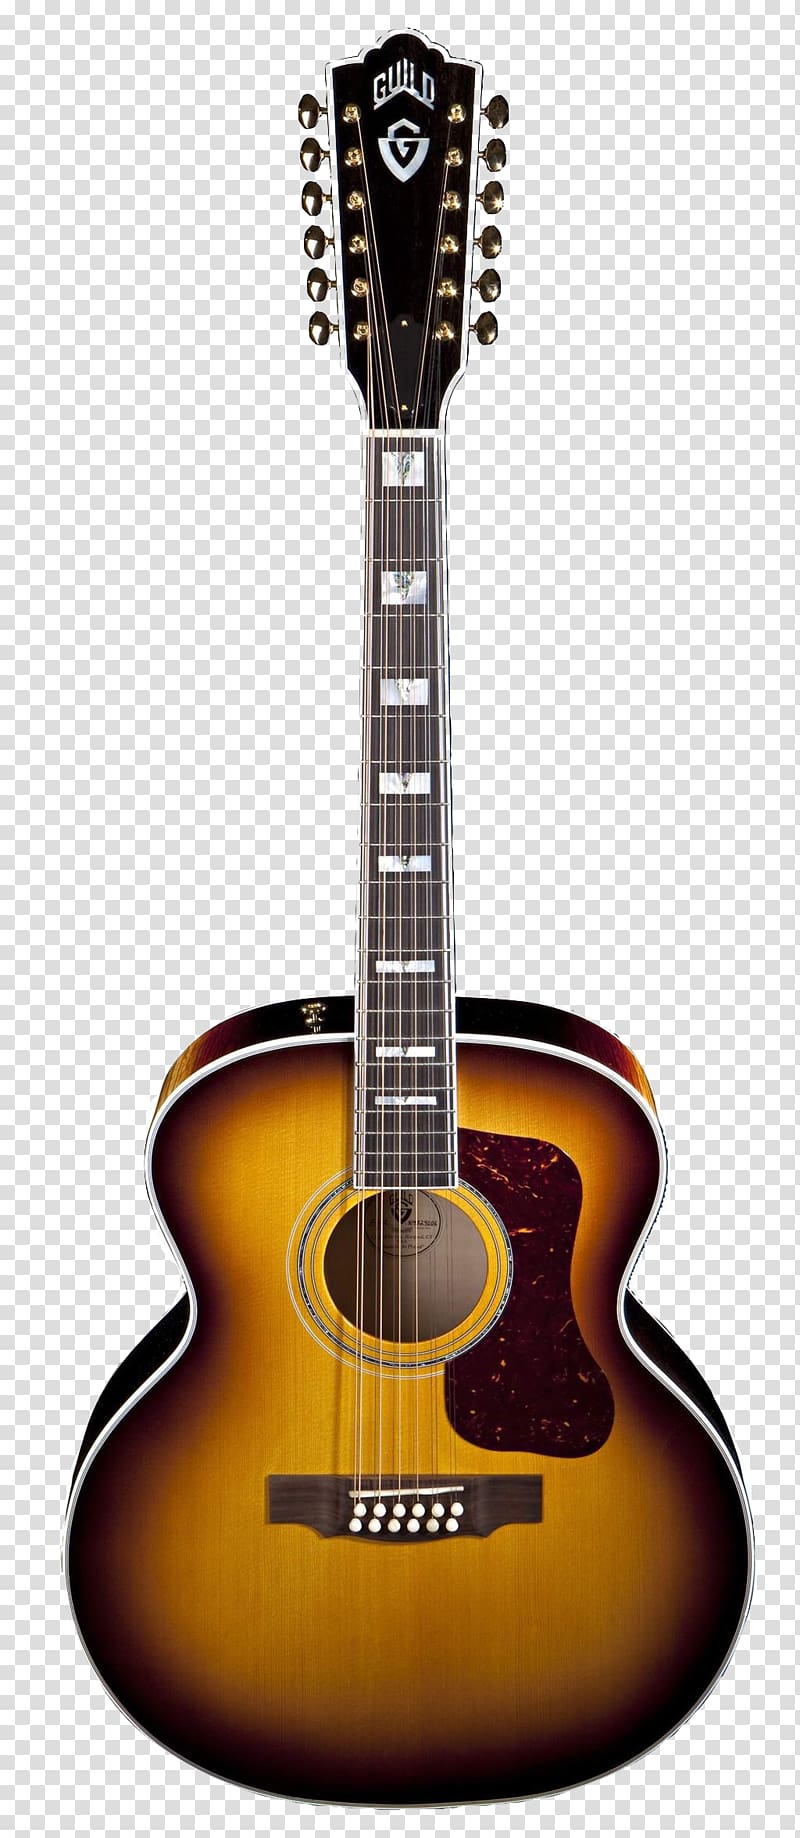 Twelve-string guitar Guild Guitar Company Acoustic guitar Electric guitar, guitar transparent background PNG clipart